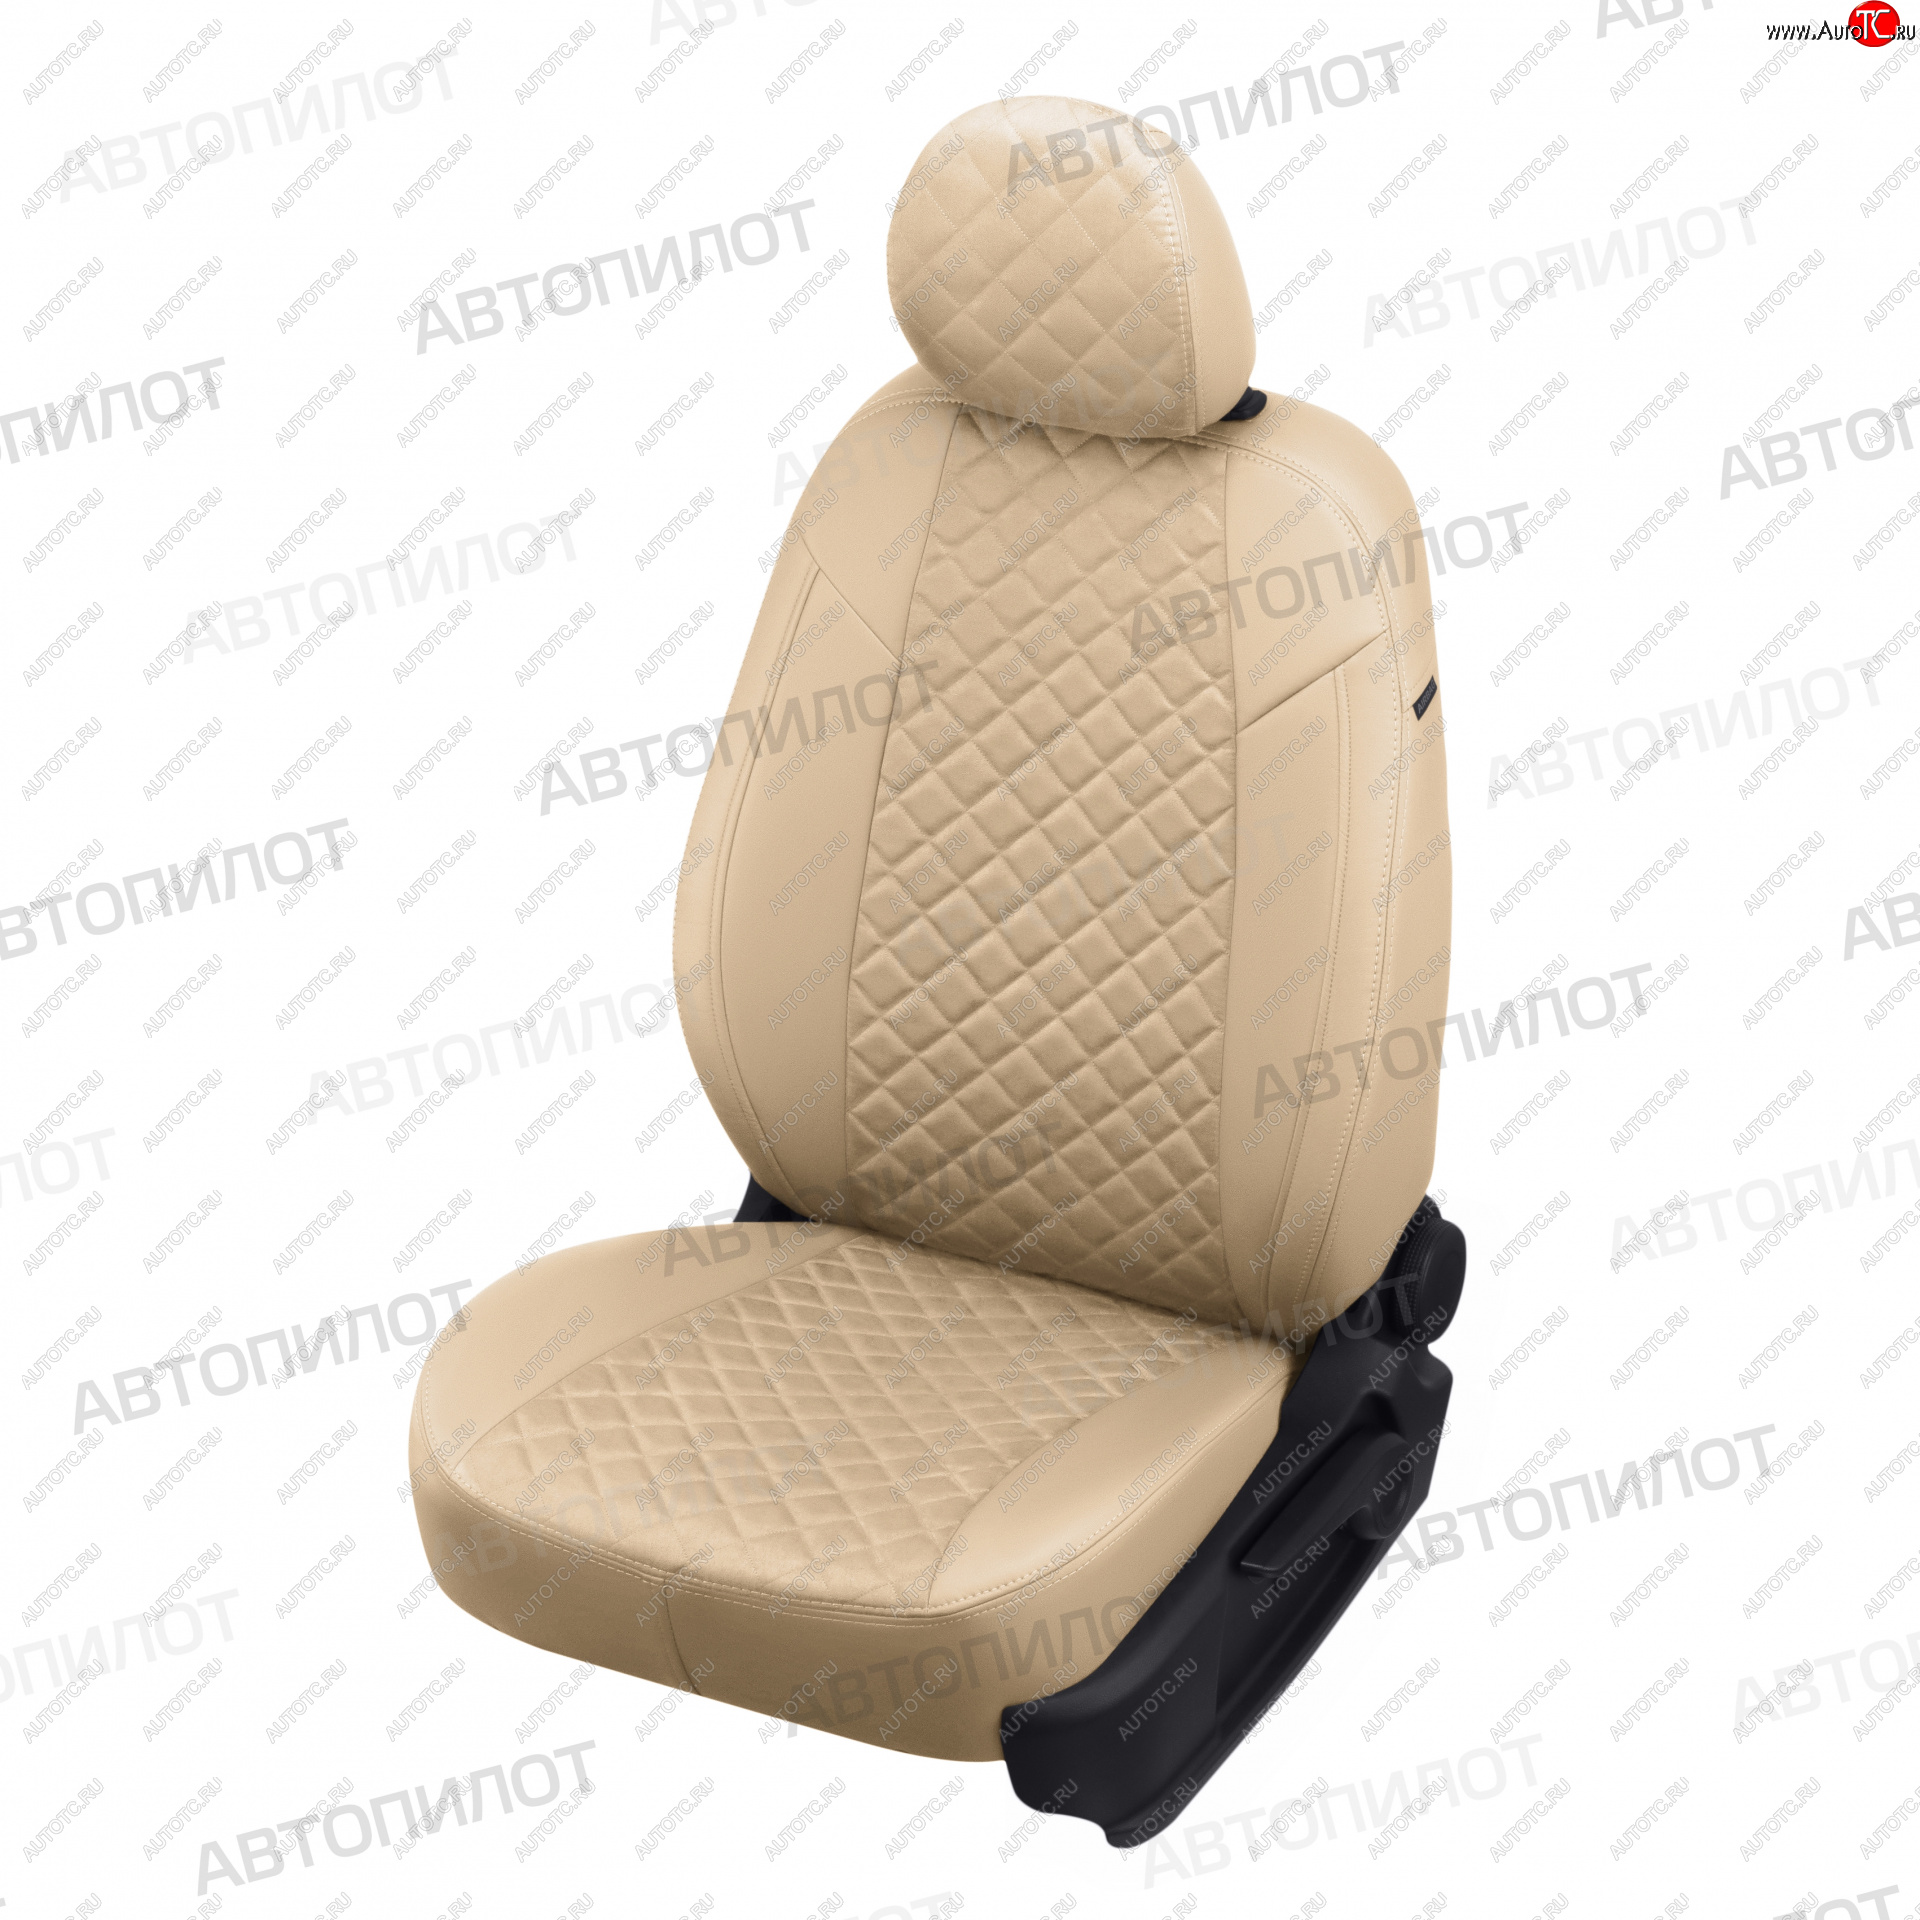 7 799 р. Чехлы сидений (экокожа/алькантара) Автопилот Ромб  Ford Mondeo (2007-2014) (бежевый)